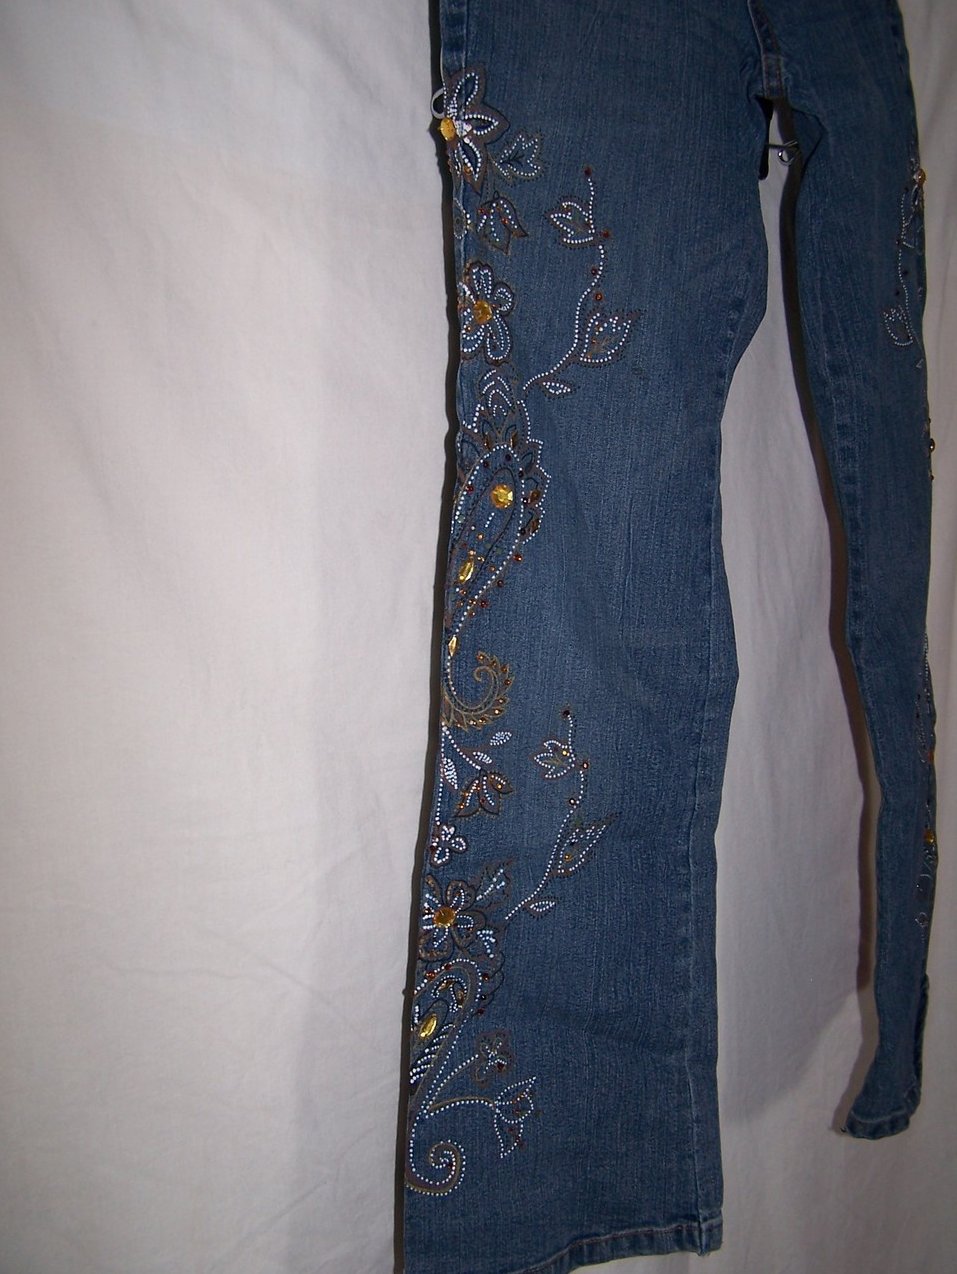 Decorated Jeans, Jrs Sz 8P, Distressed